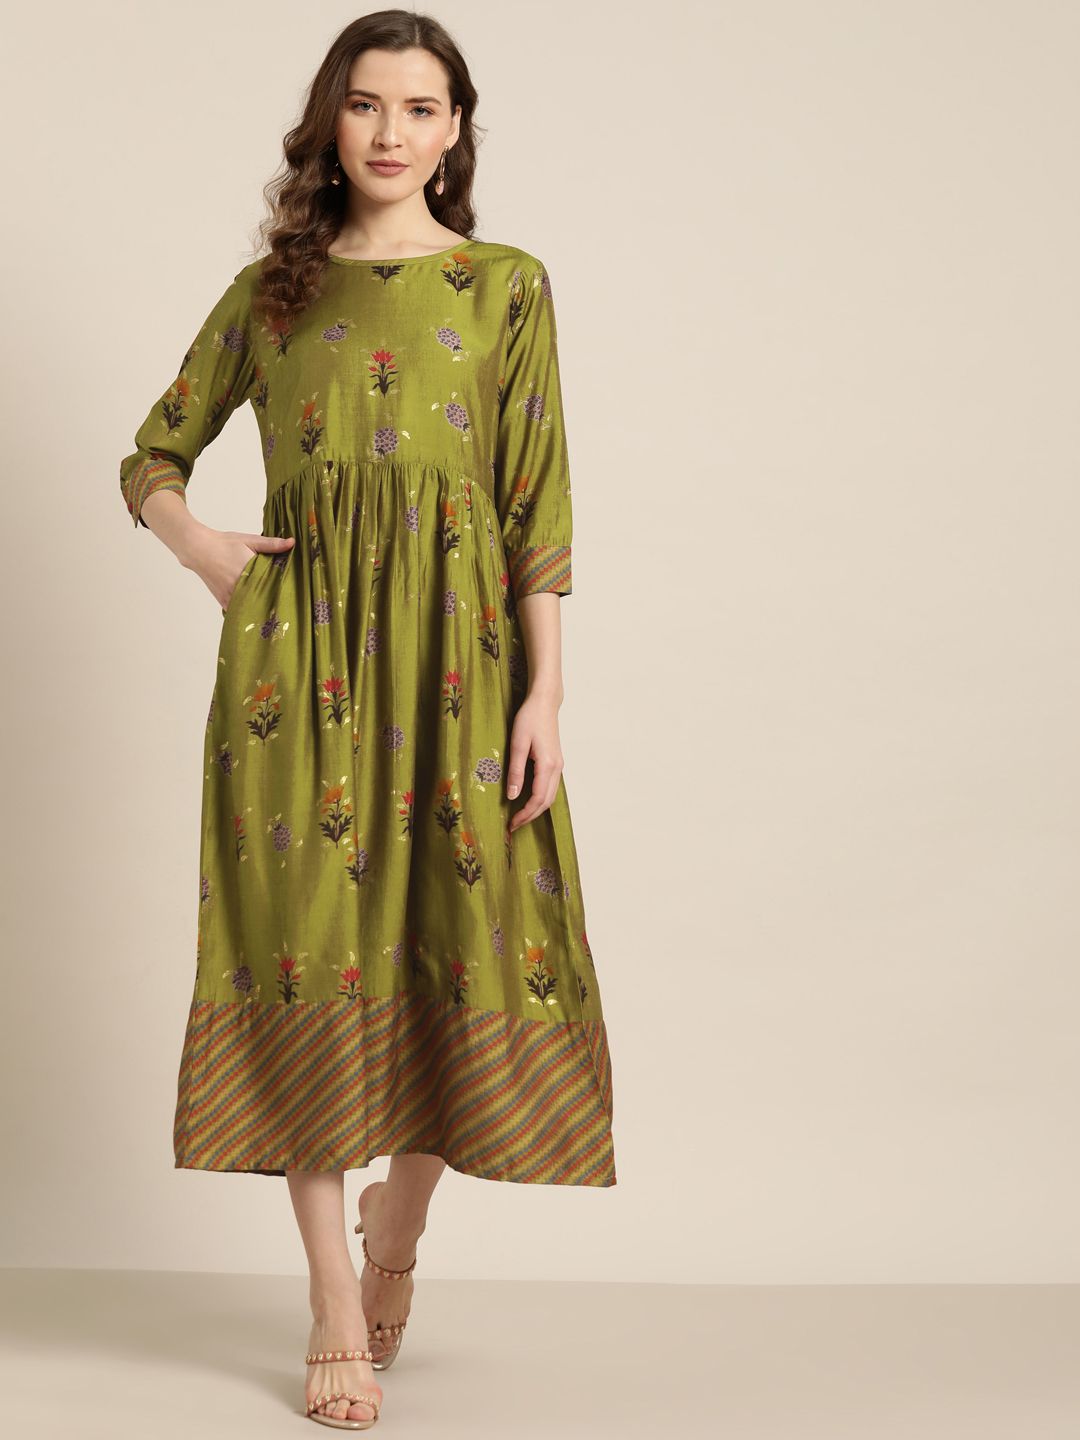 Sangria Women Green & Orange Ethnic Floral Motif Print A-Line Dress Price in India